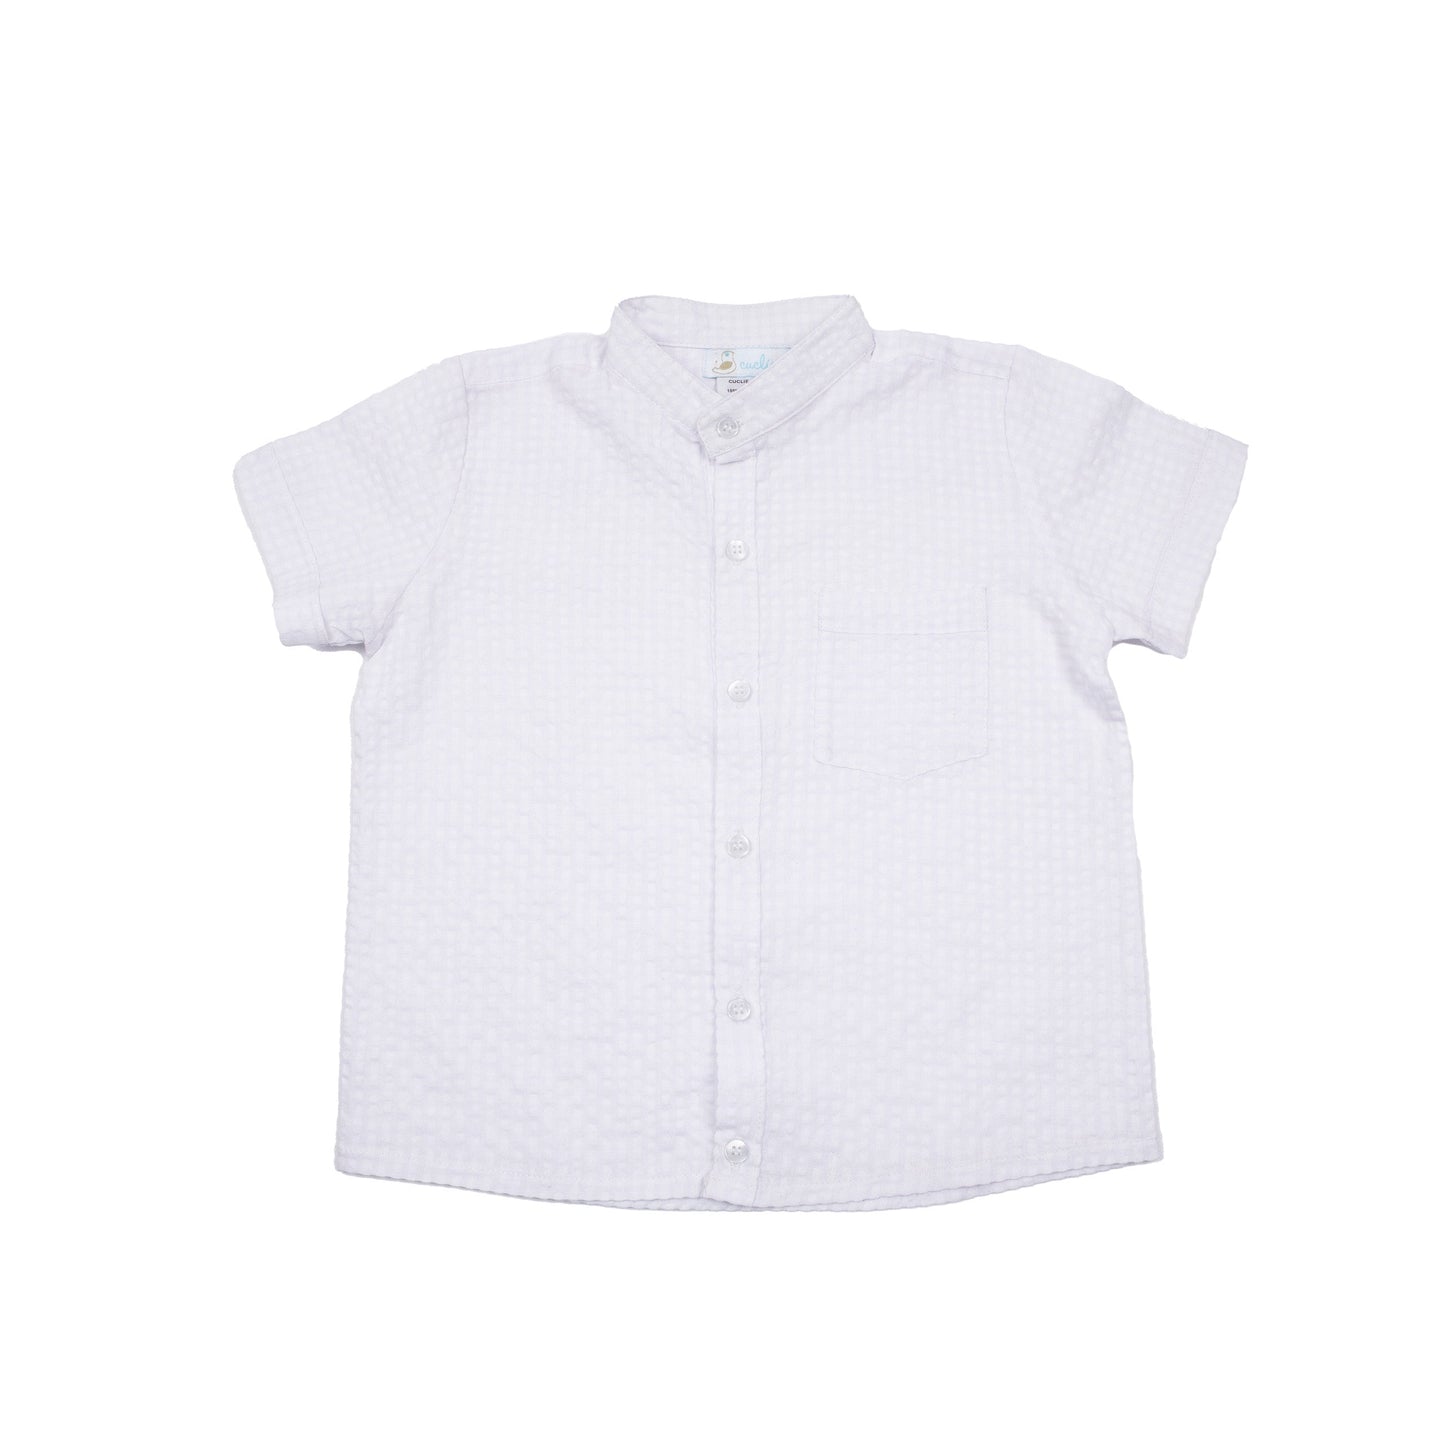 Boys Banded Collar Button Down Shirt, White